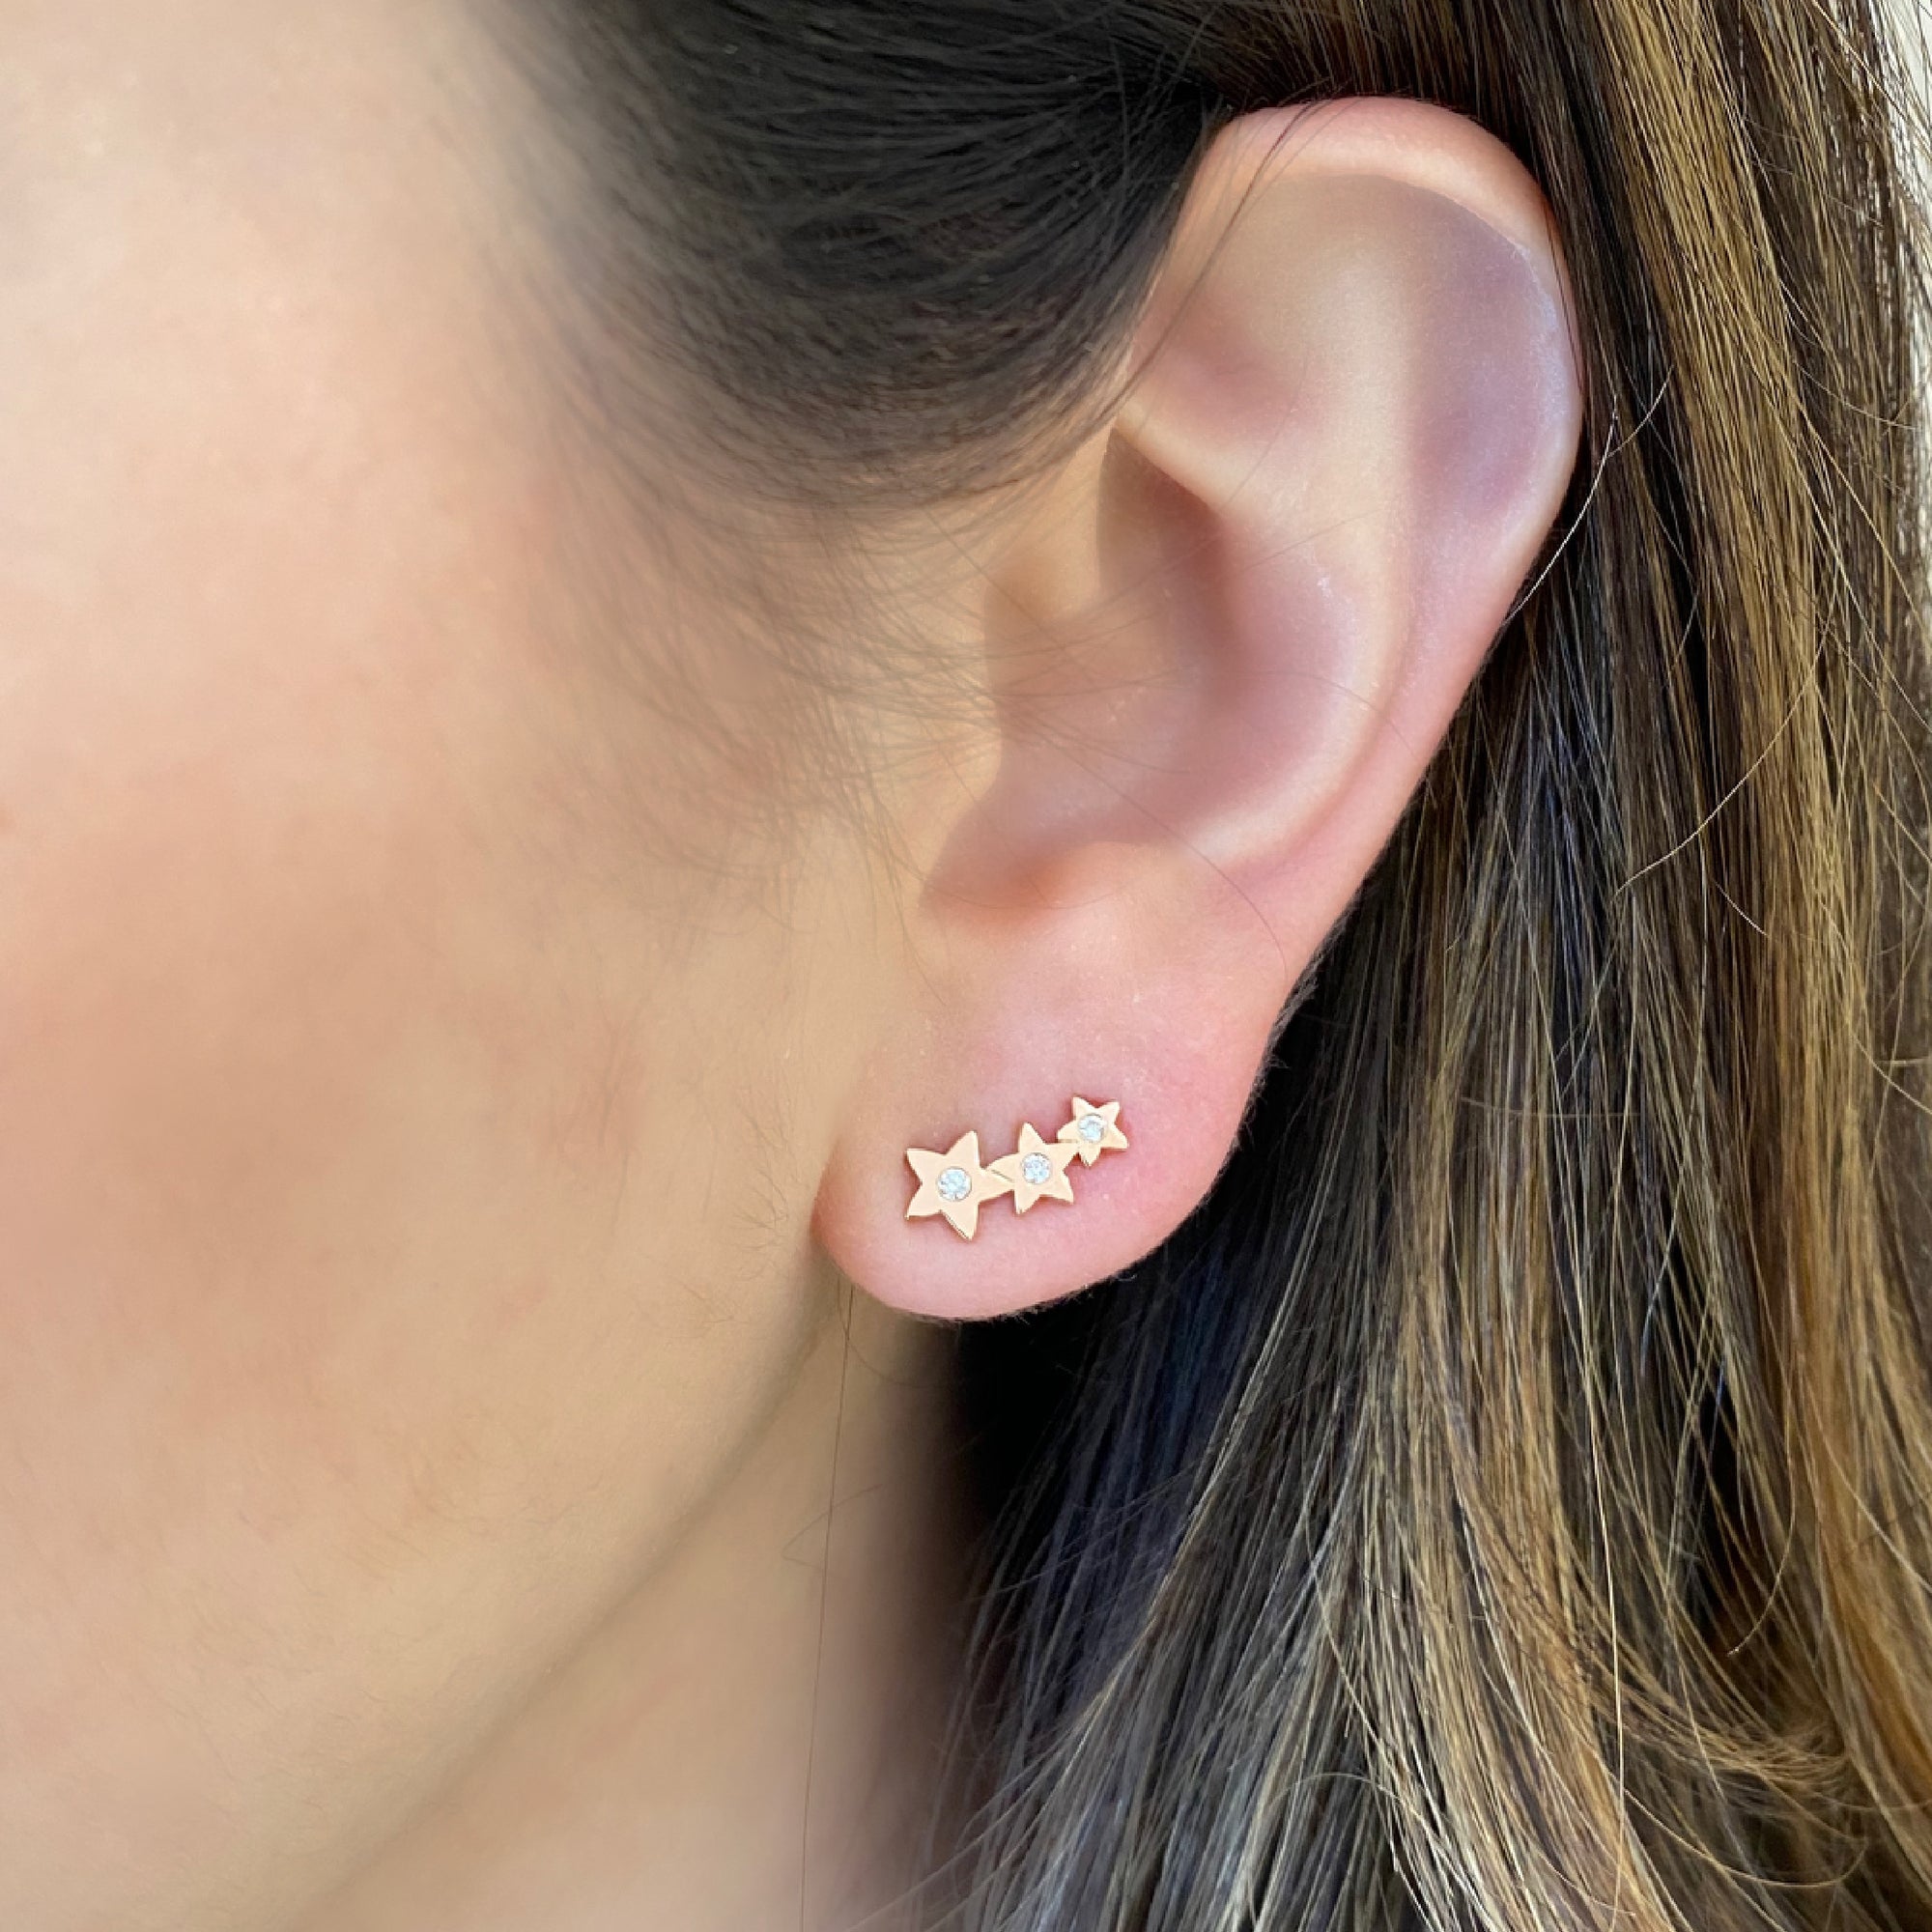 Diamond Moon & Star Crawler Earrings - 14K gold weighing 1.37 grams - 8 round diamonds totaling 0.09 carats